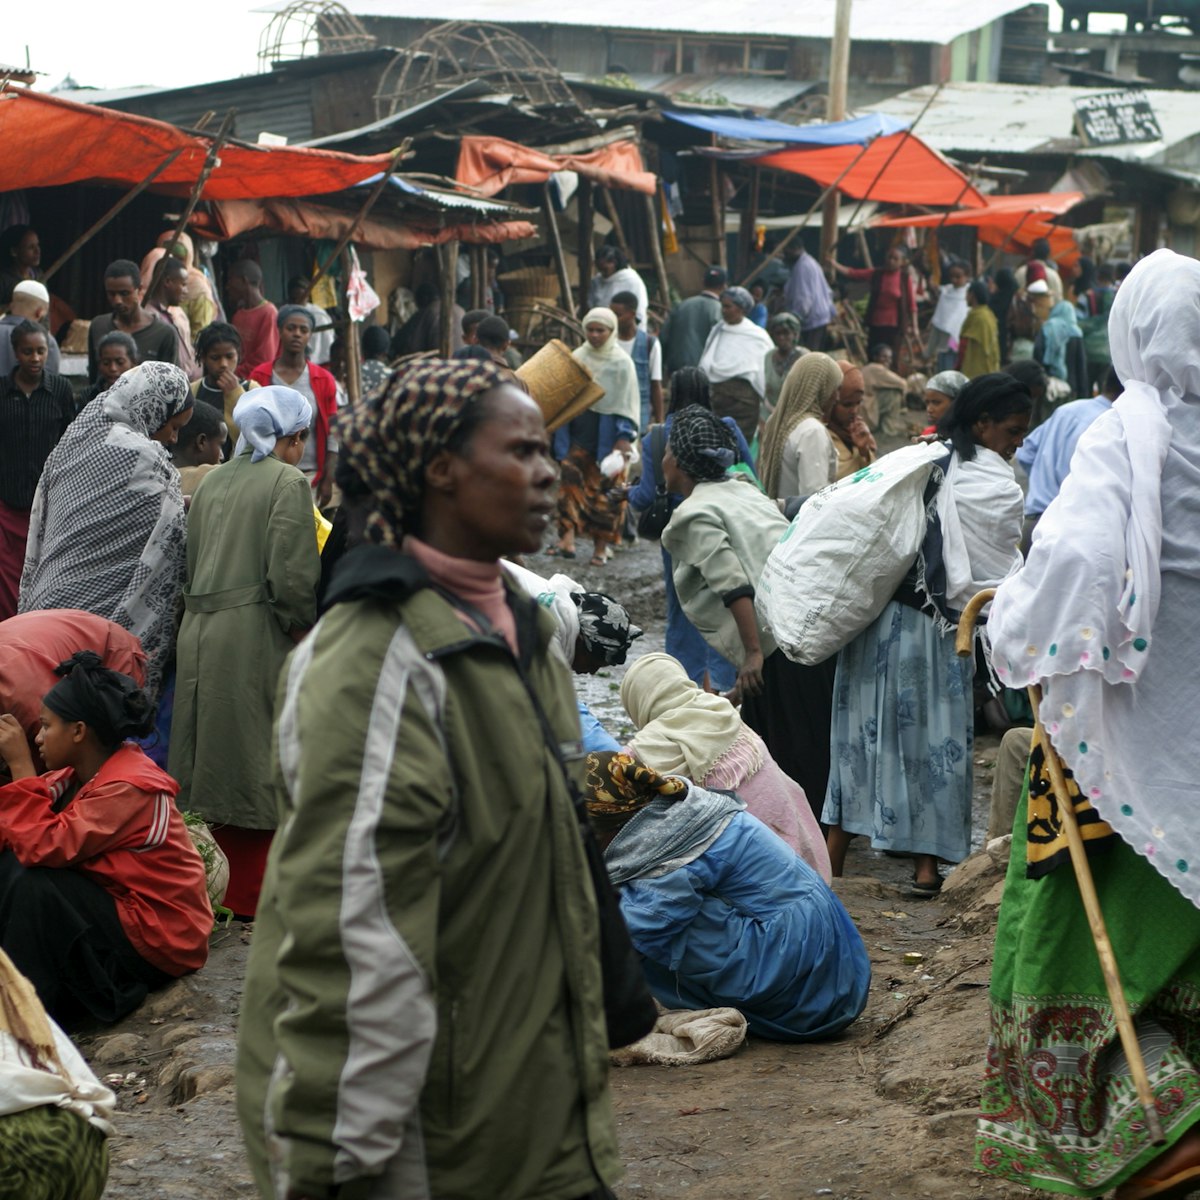 Shoppers in Merkato (market).